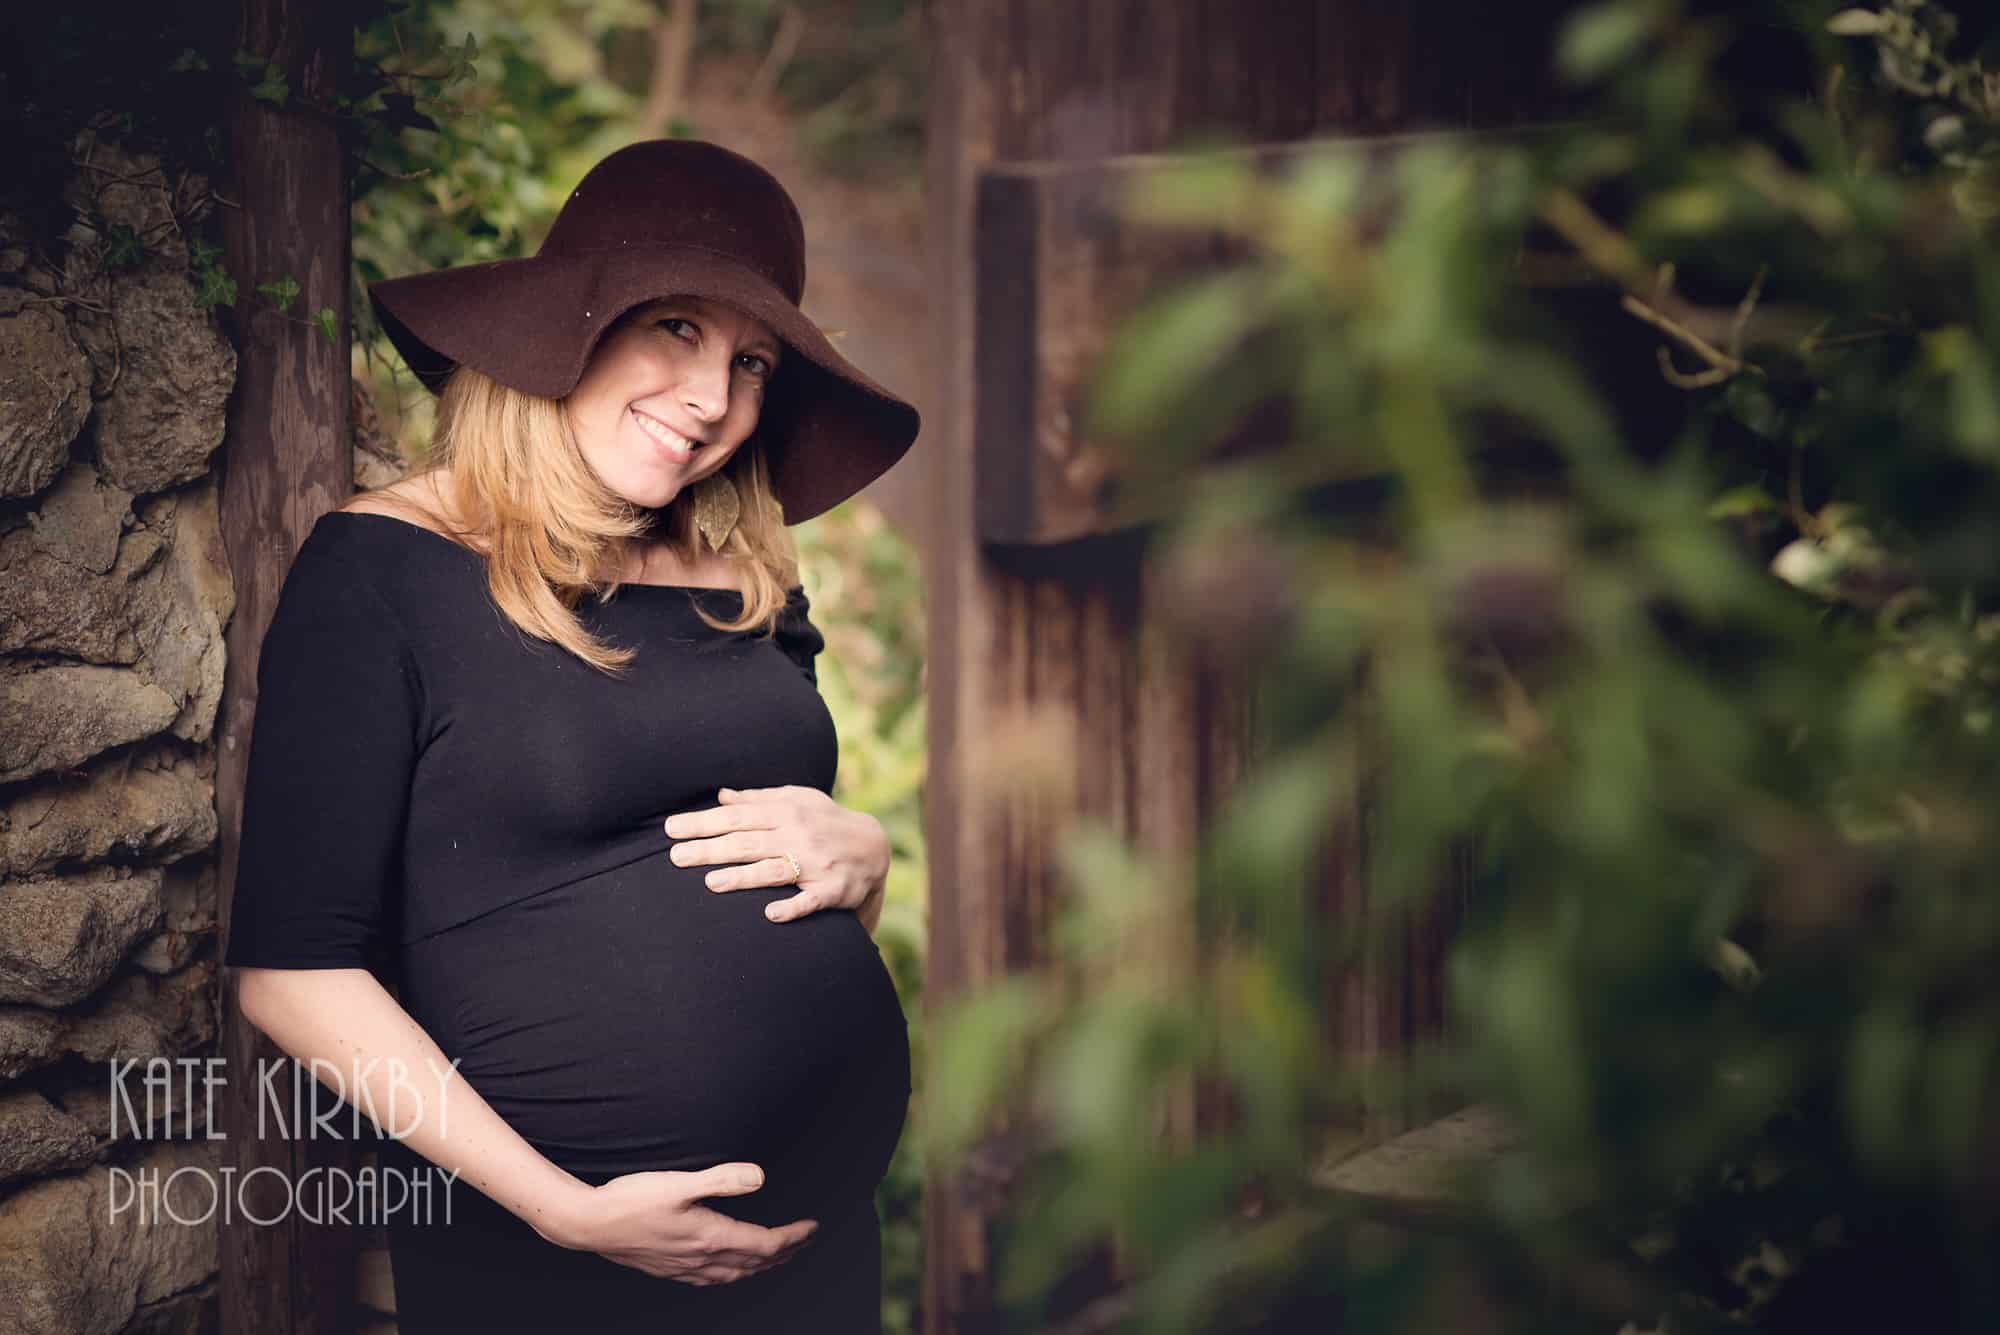 pregnant woman in black dress and brown floppy hat standing in garden gateway